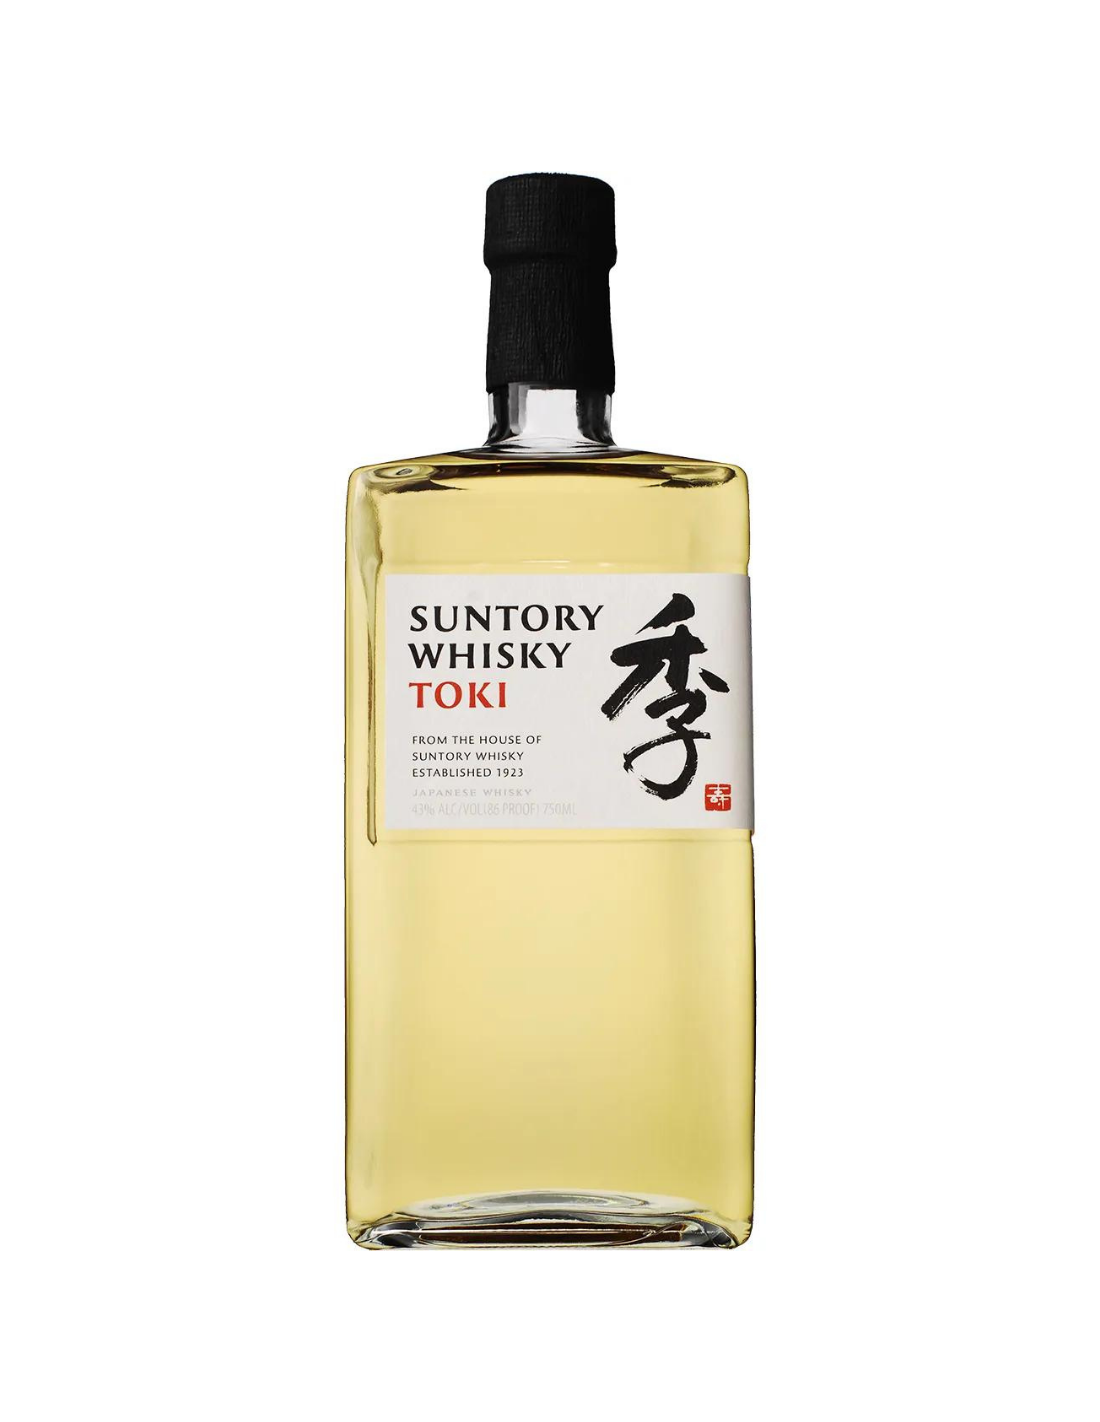 Whisky Suntory Toki, 0.7L, 43% alc., Japonia alcooldiscount.ro